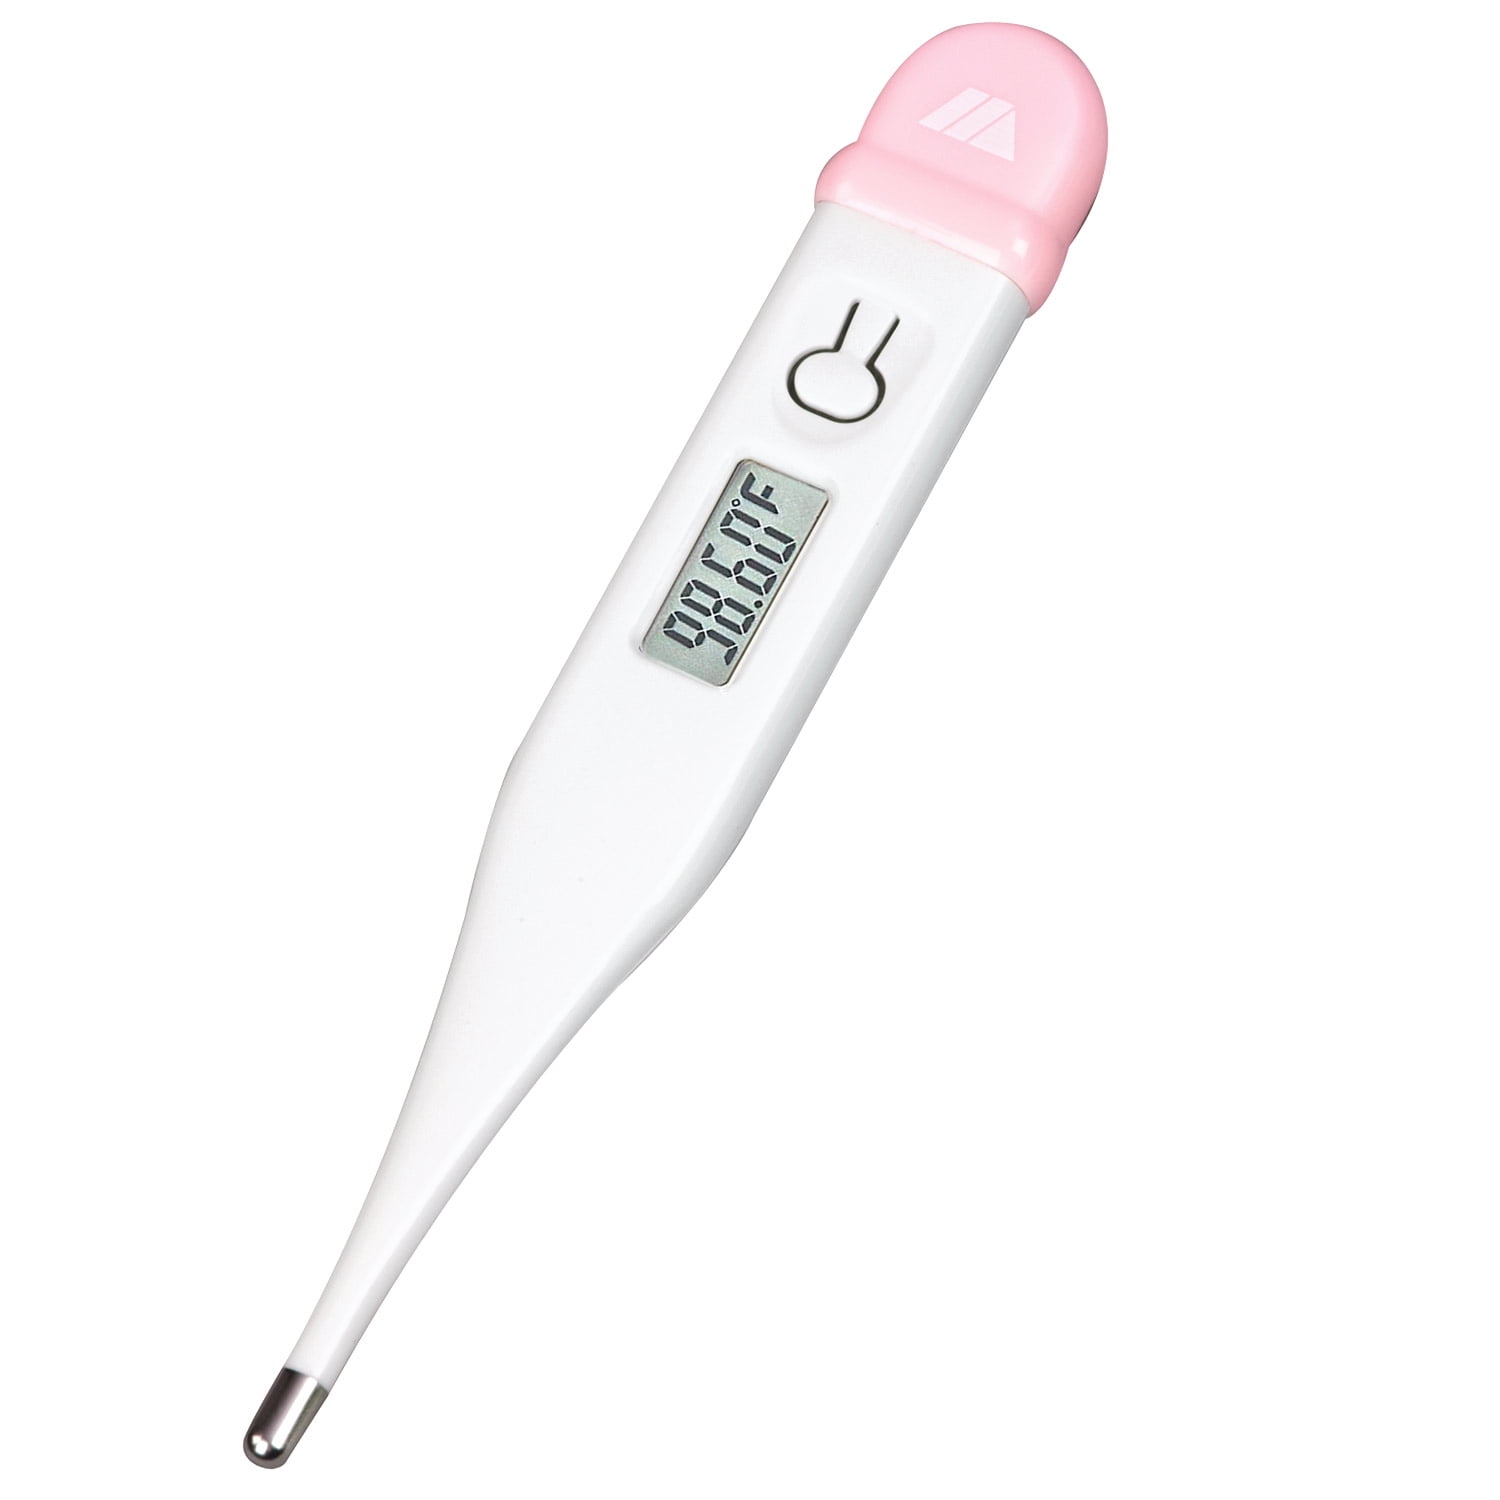 Mabis Digital Thermometer Basal, Oral Probe, Hand-Held 